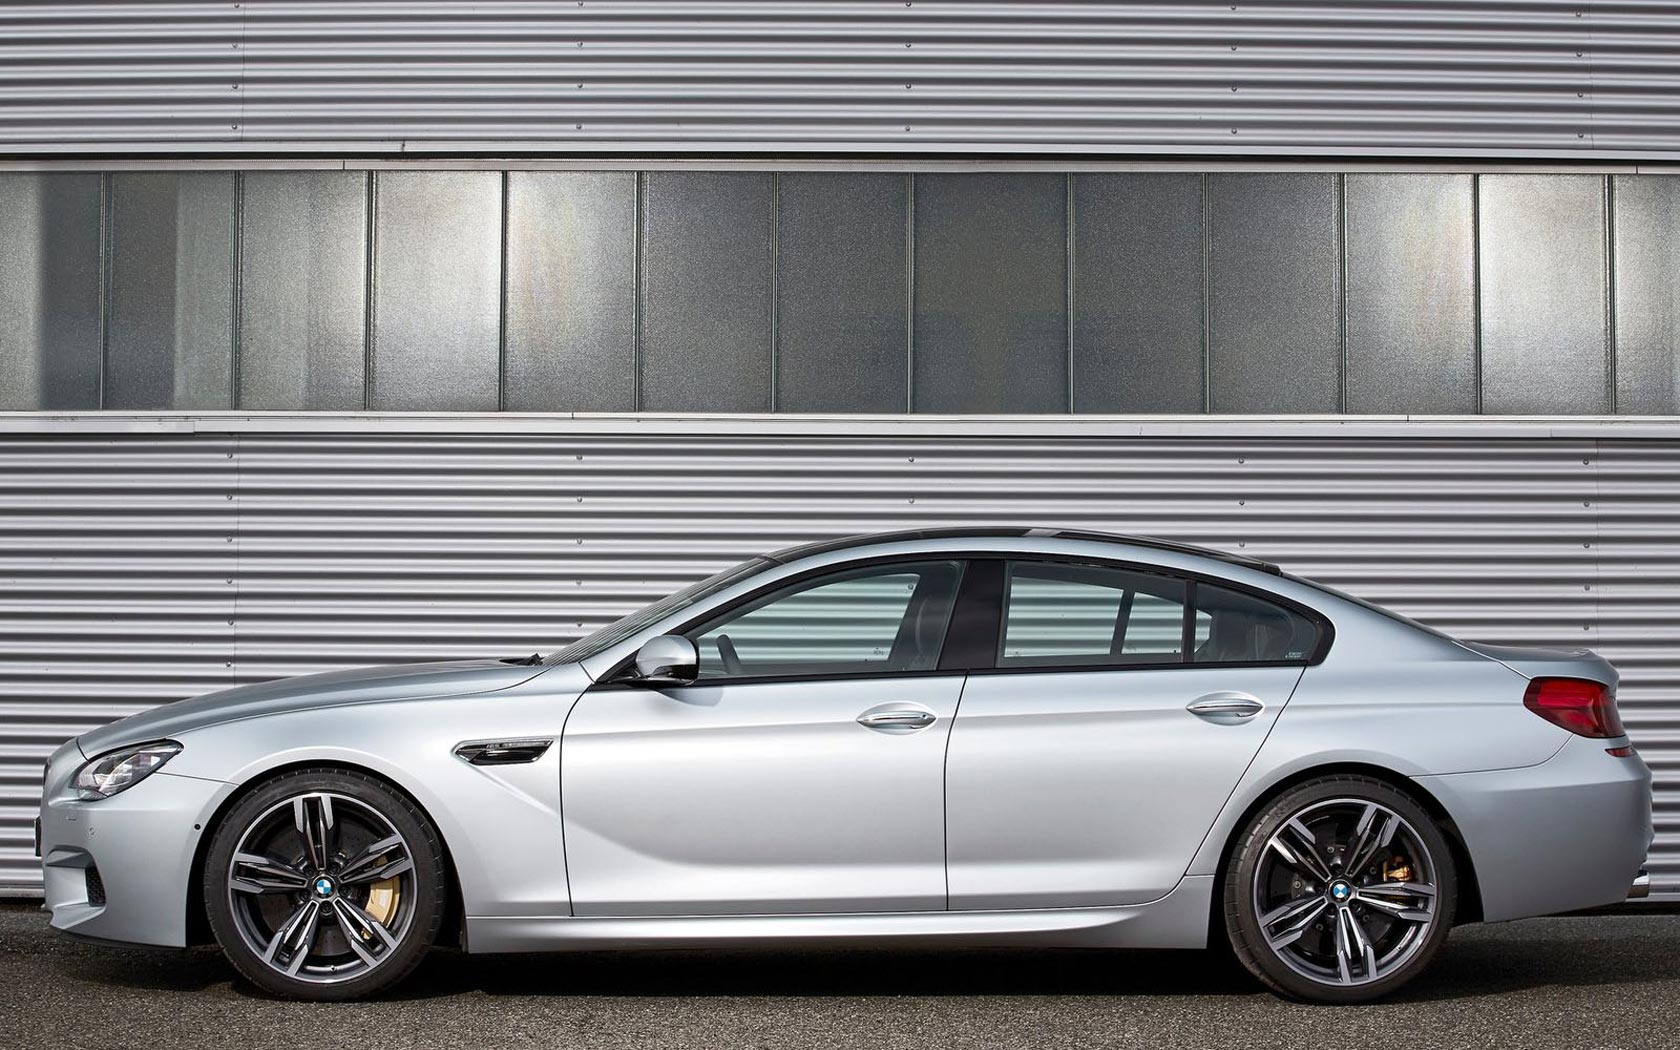  BMW M6 Gran Coupe (2013-2015)